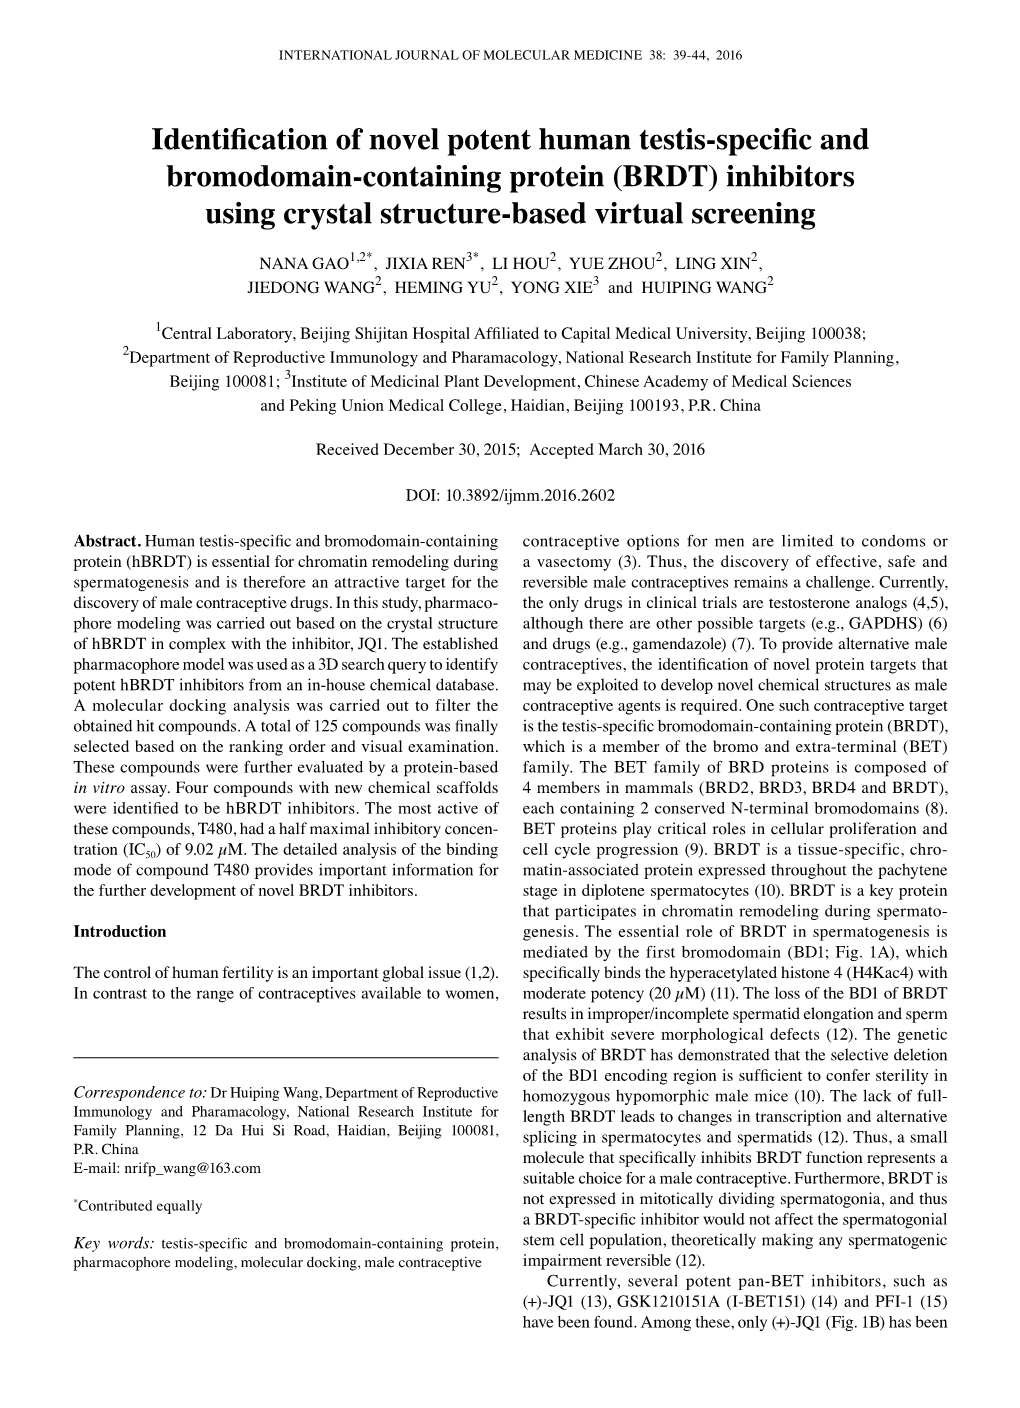 (BRDT) Inhibitors Using Crystal Structure-Based Virtual Screening